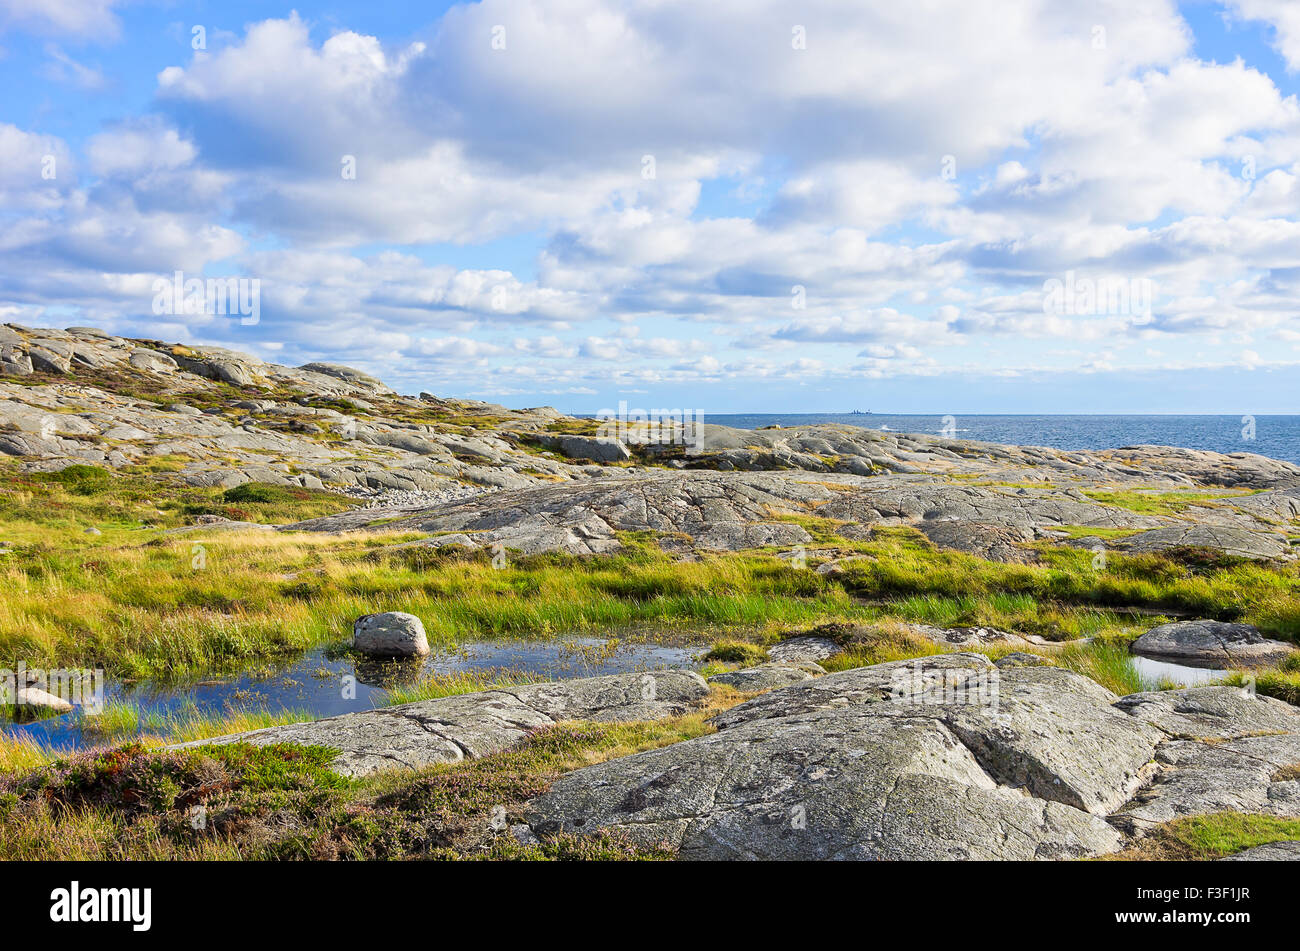 Coastal landscape in a natural preserve area on the Swedish West coast. Stock Photo